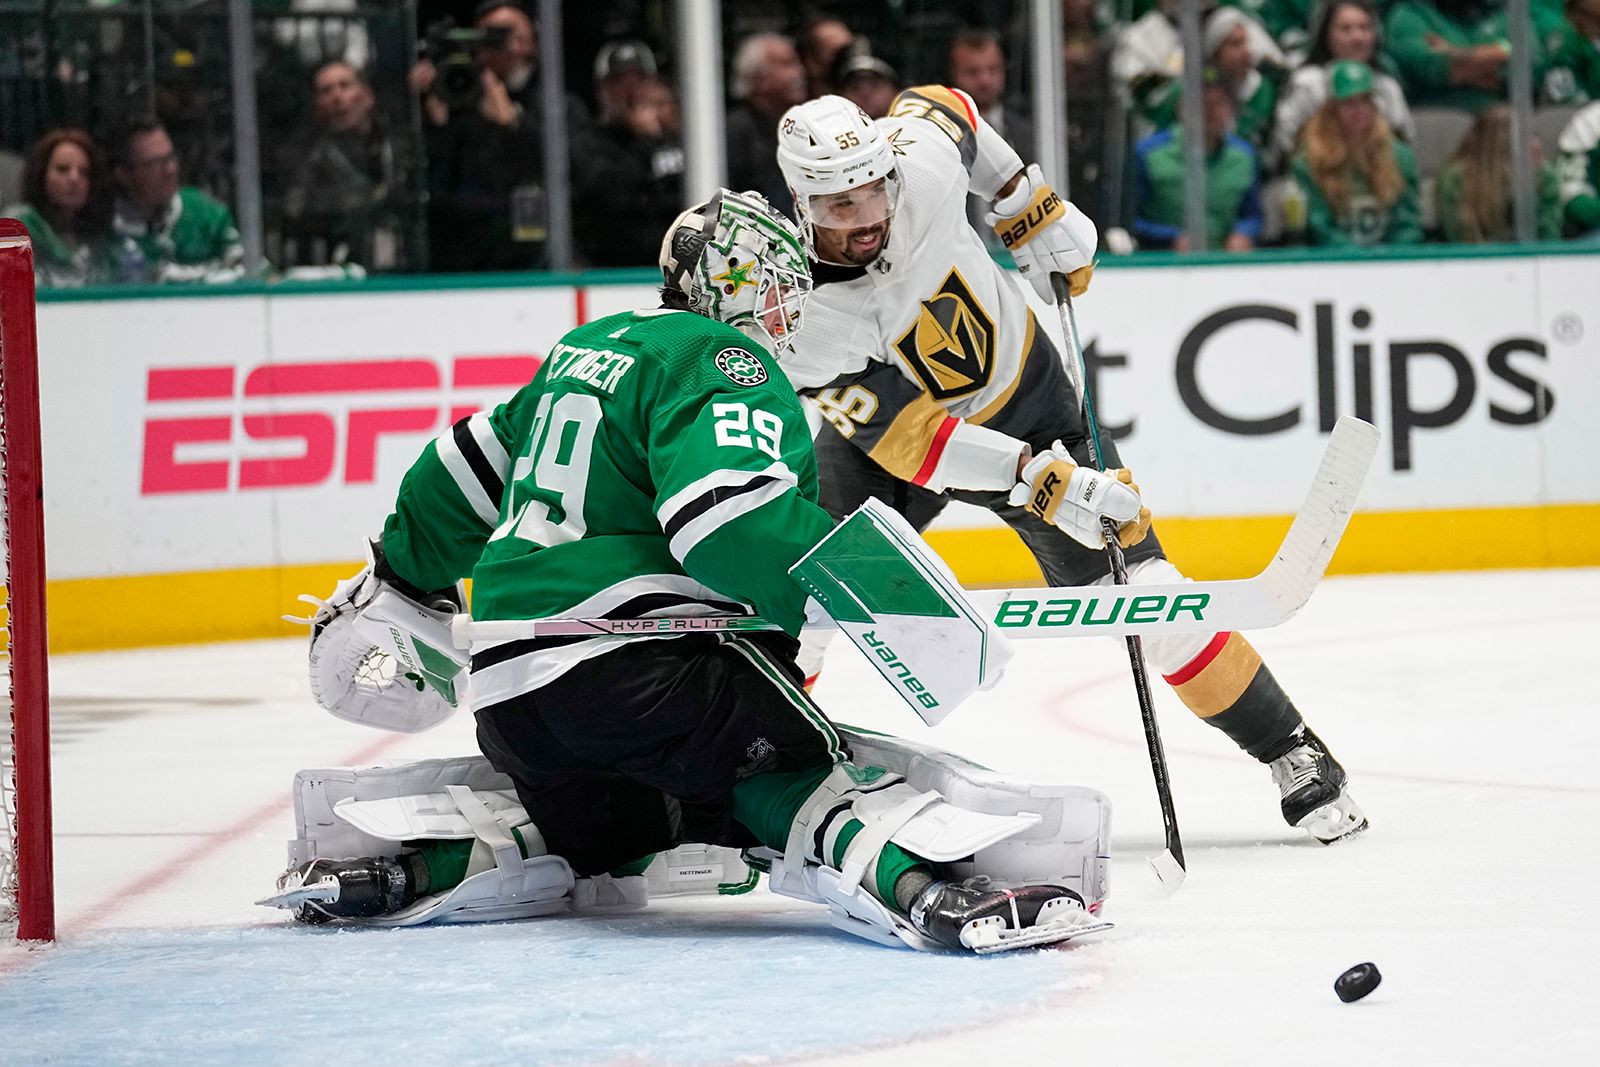 NHL playoffs: Golden Knights advance on backs of their original stars